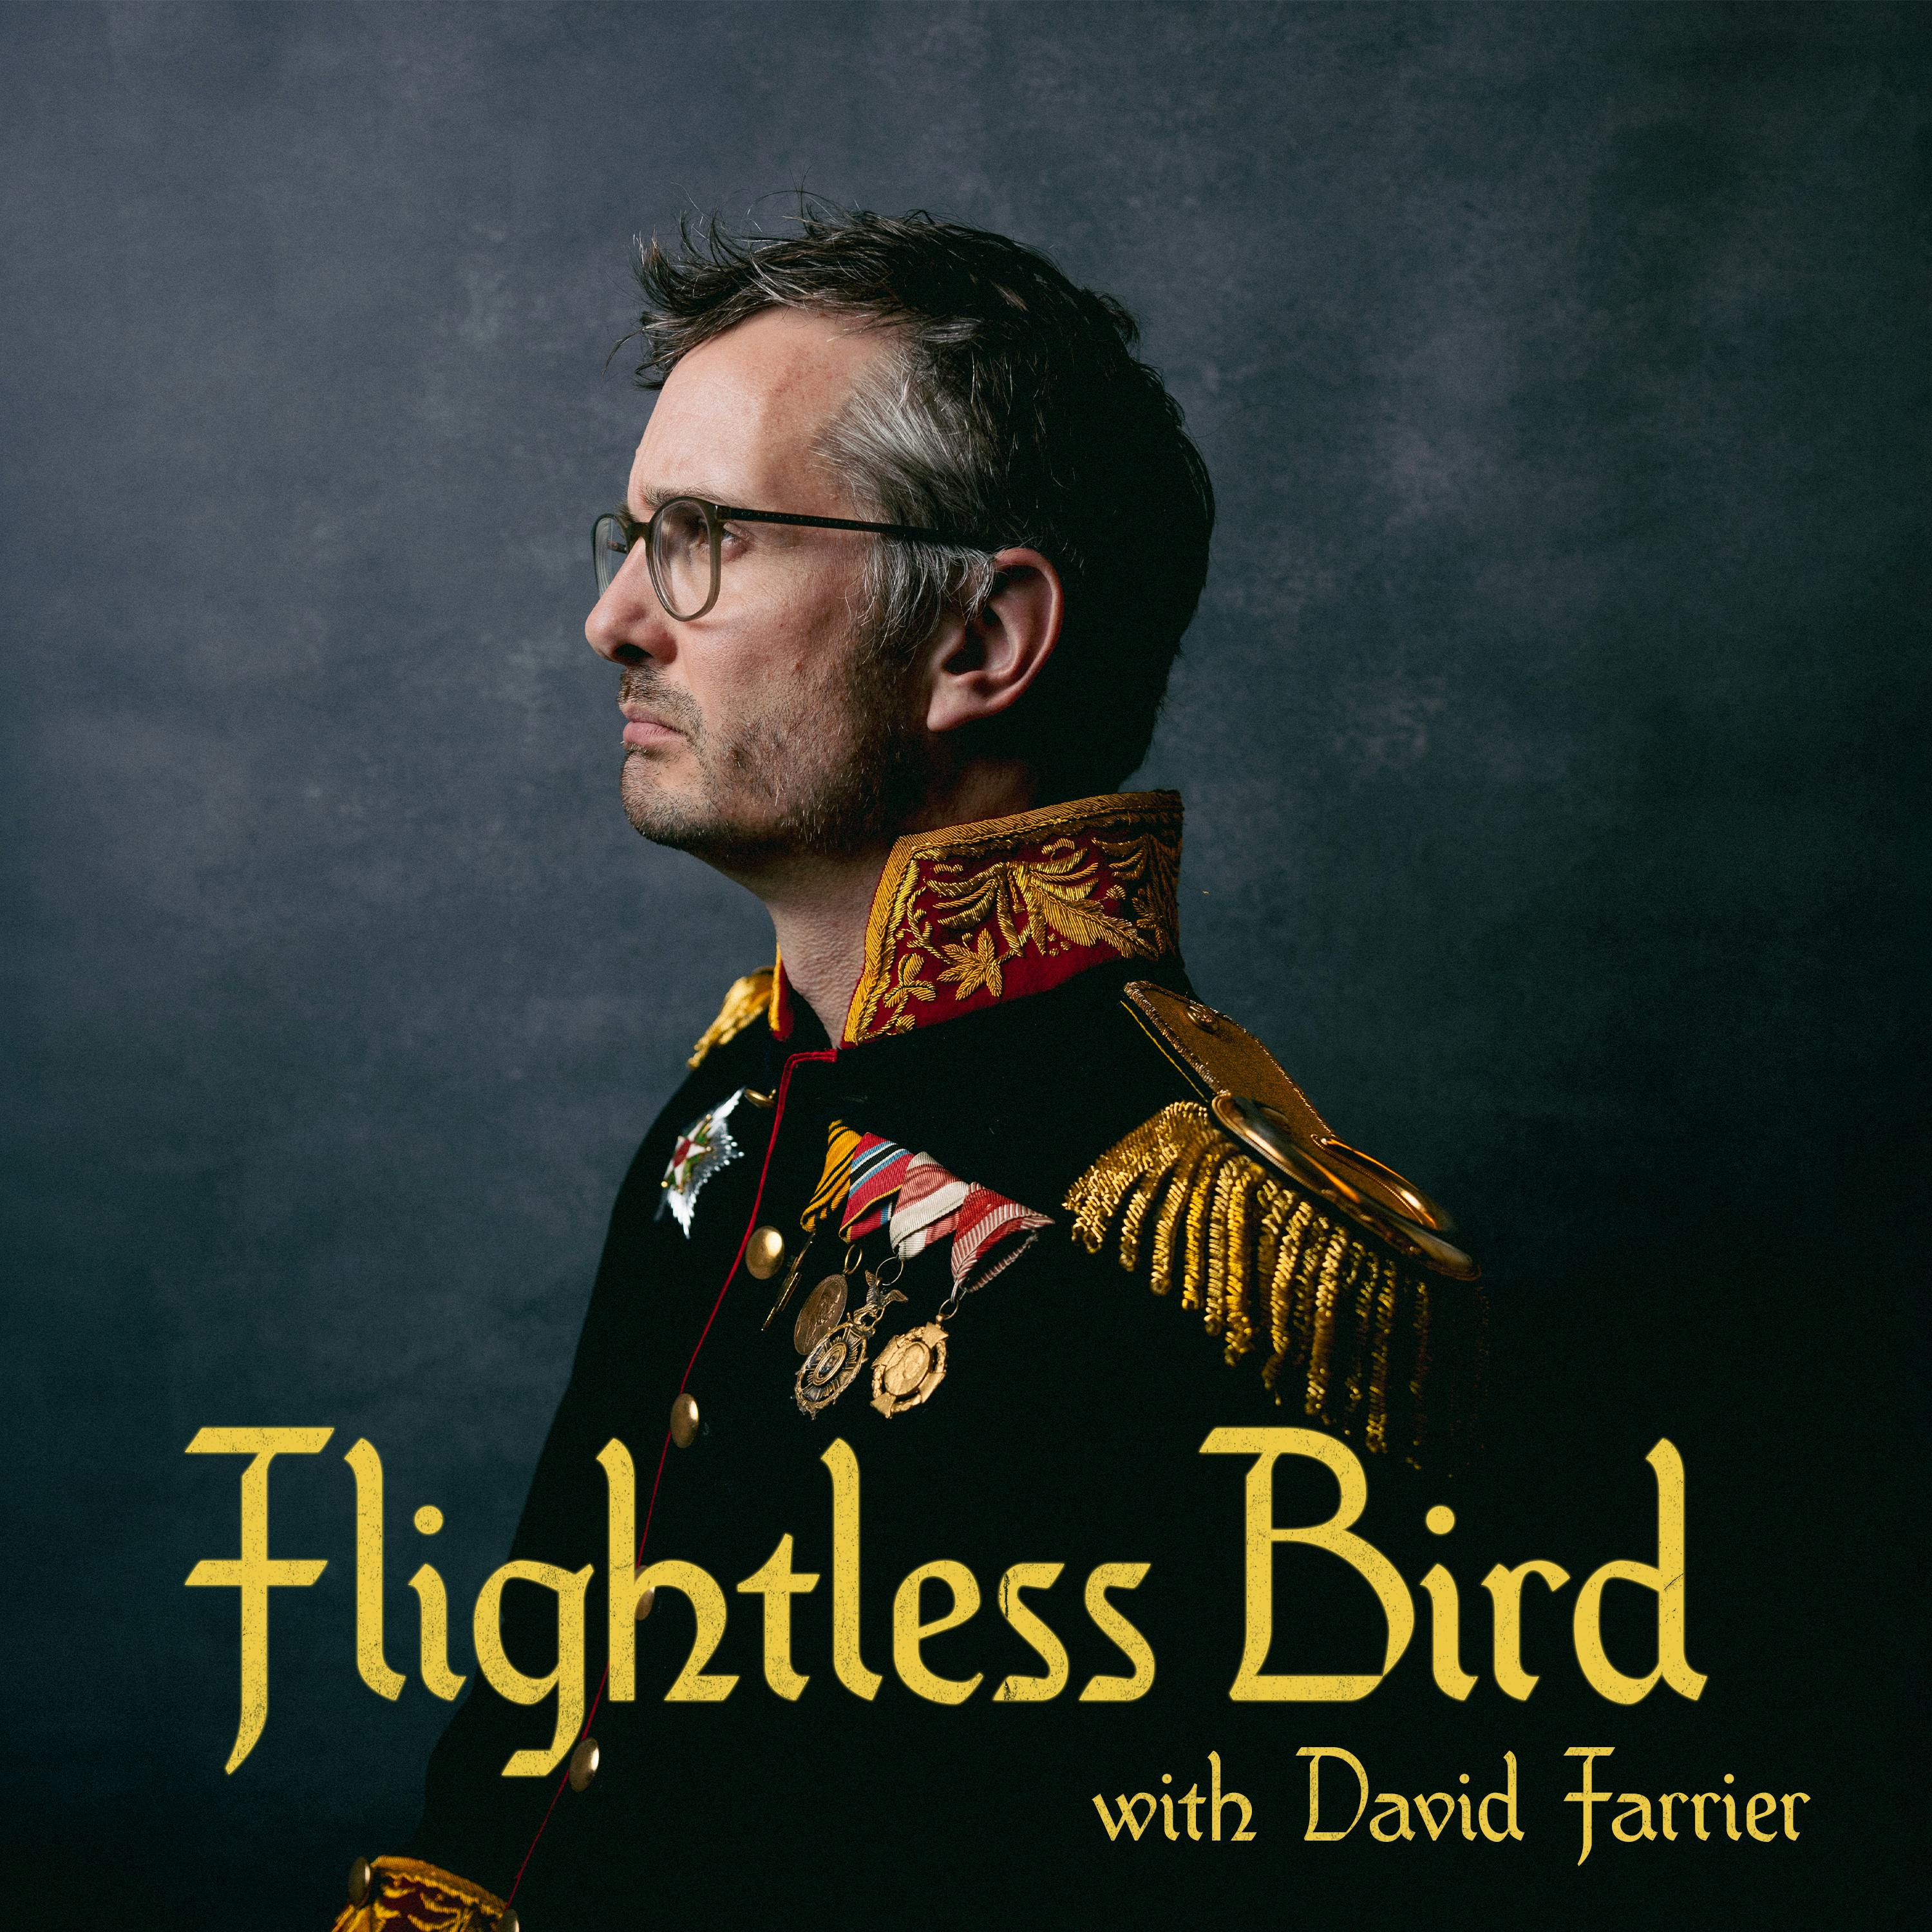 Flightless Bird: Flights of Fancy by Armchair Umbrella